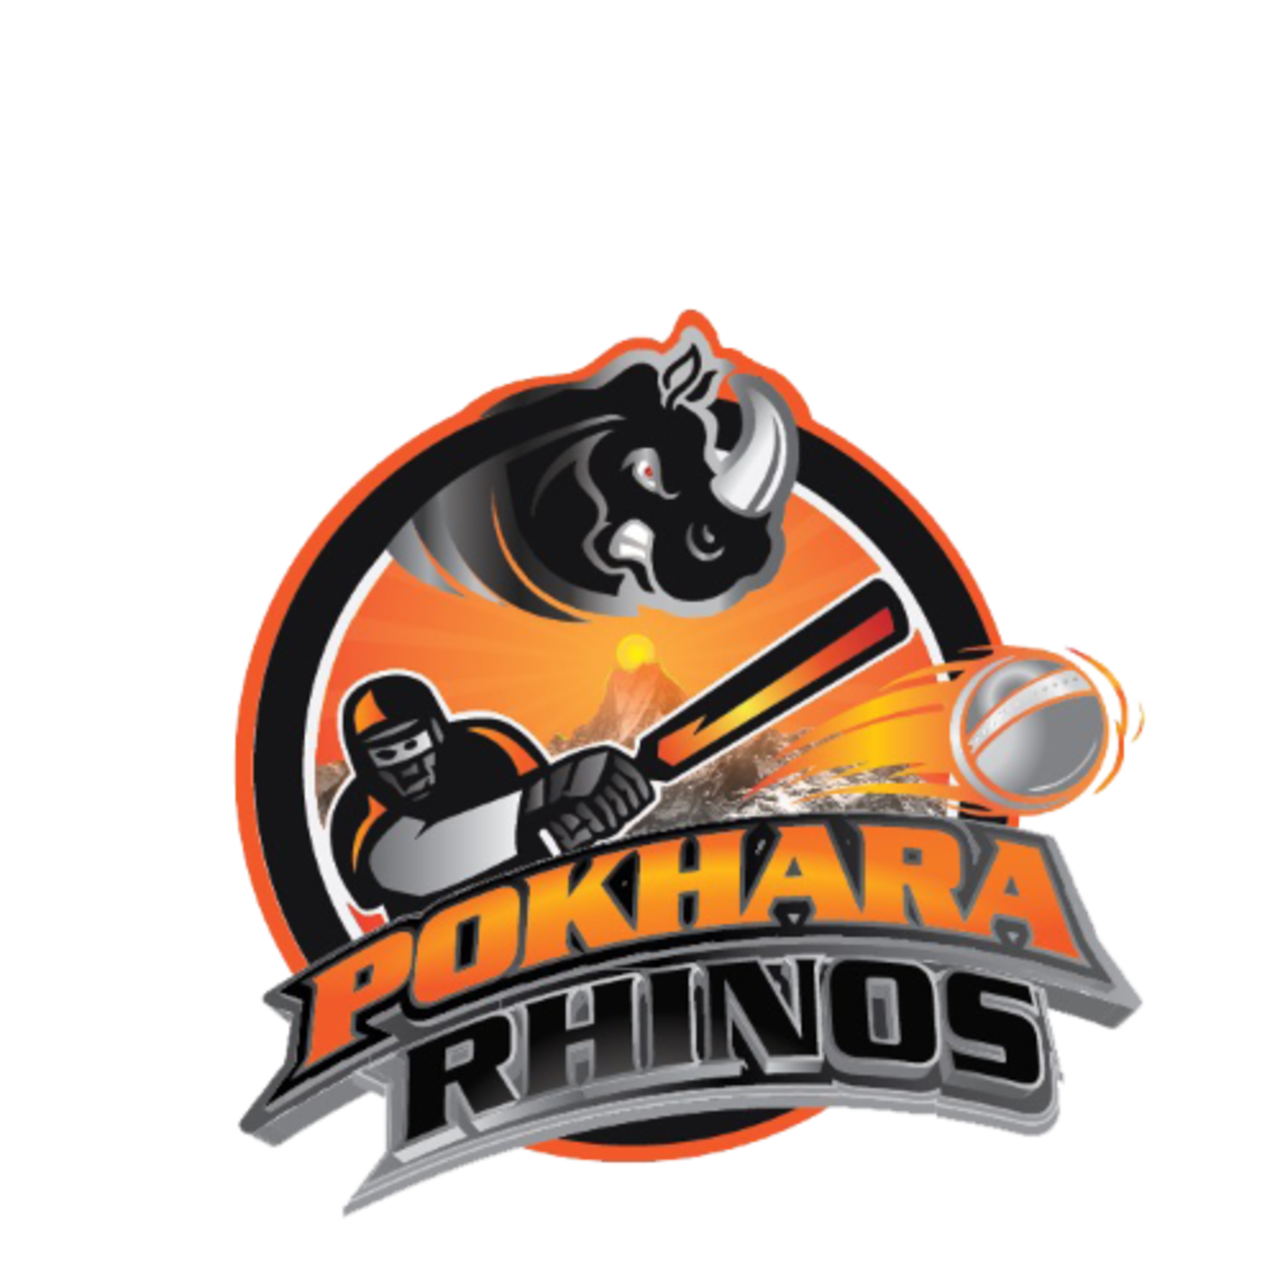 Pokhara Rhinos team logo